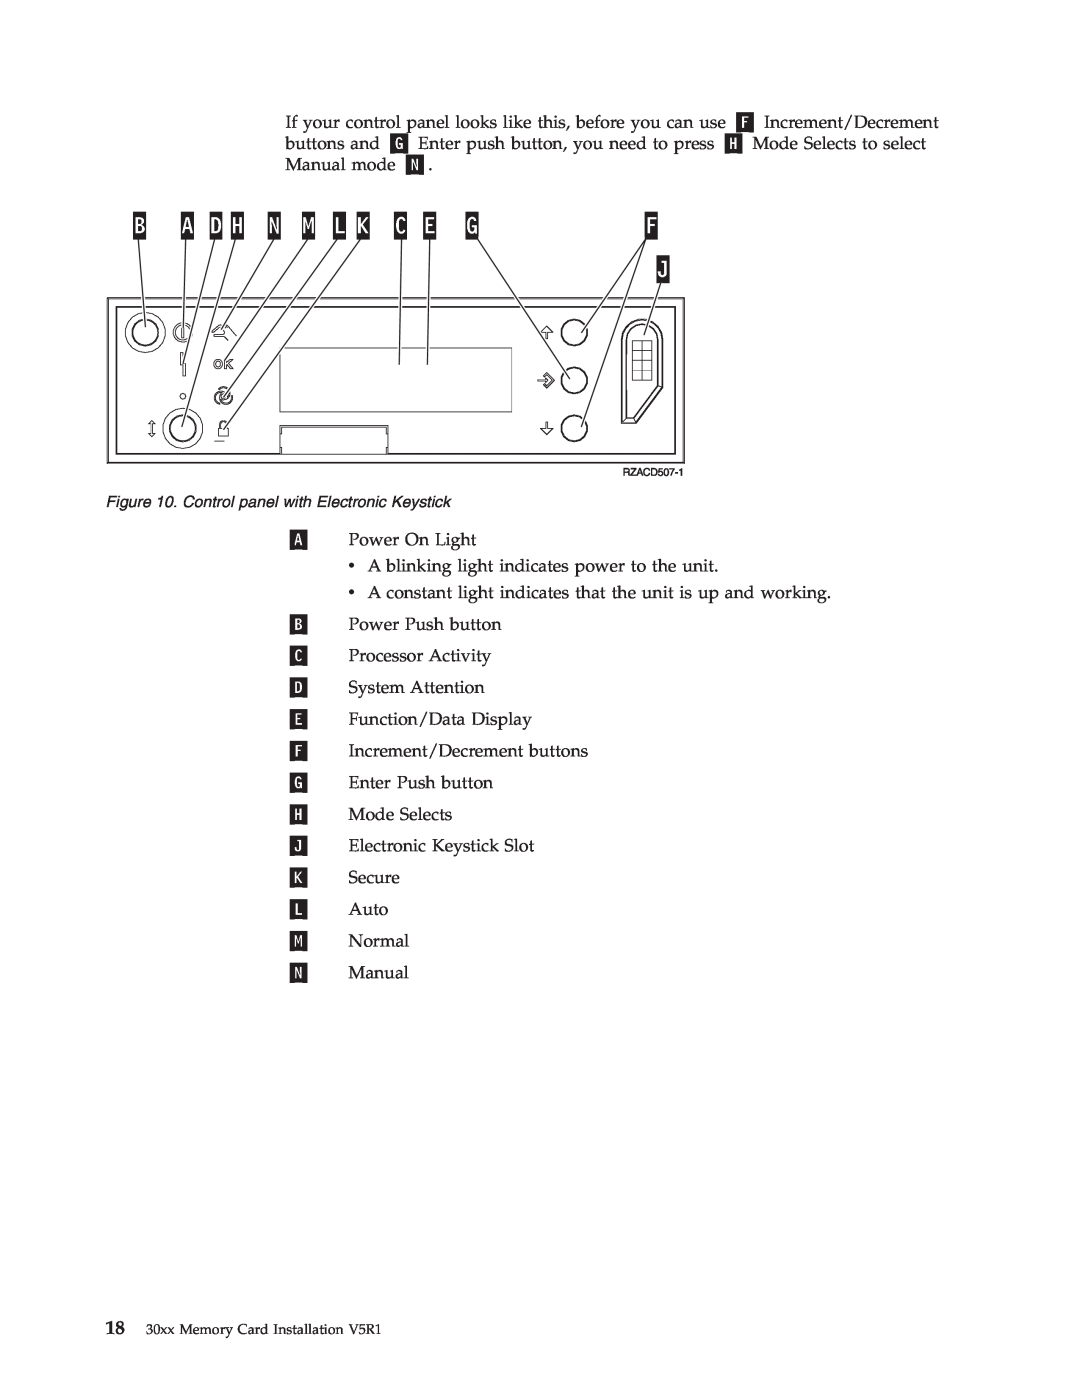 IBM SENG-3002-01 manual Control panel with Electronic Keystick, 18 30xx Memory Card Installation V5R1 